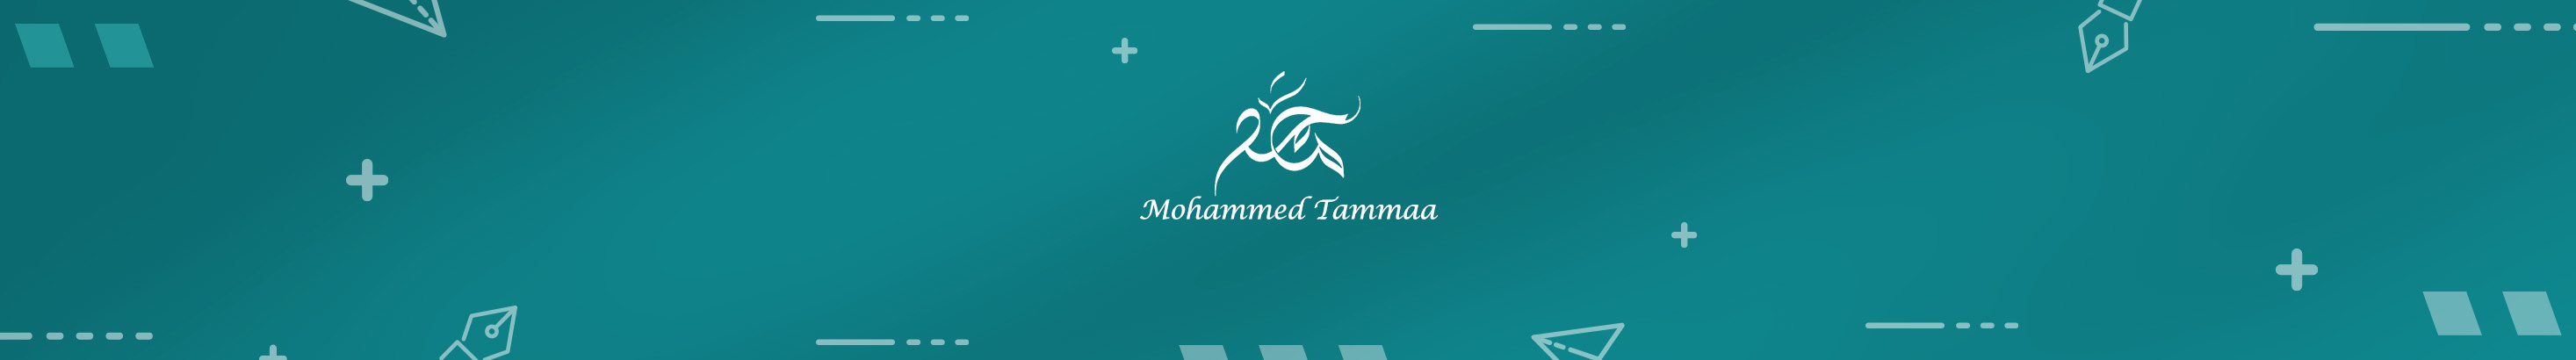 Mohammed Tammaa's profile banner